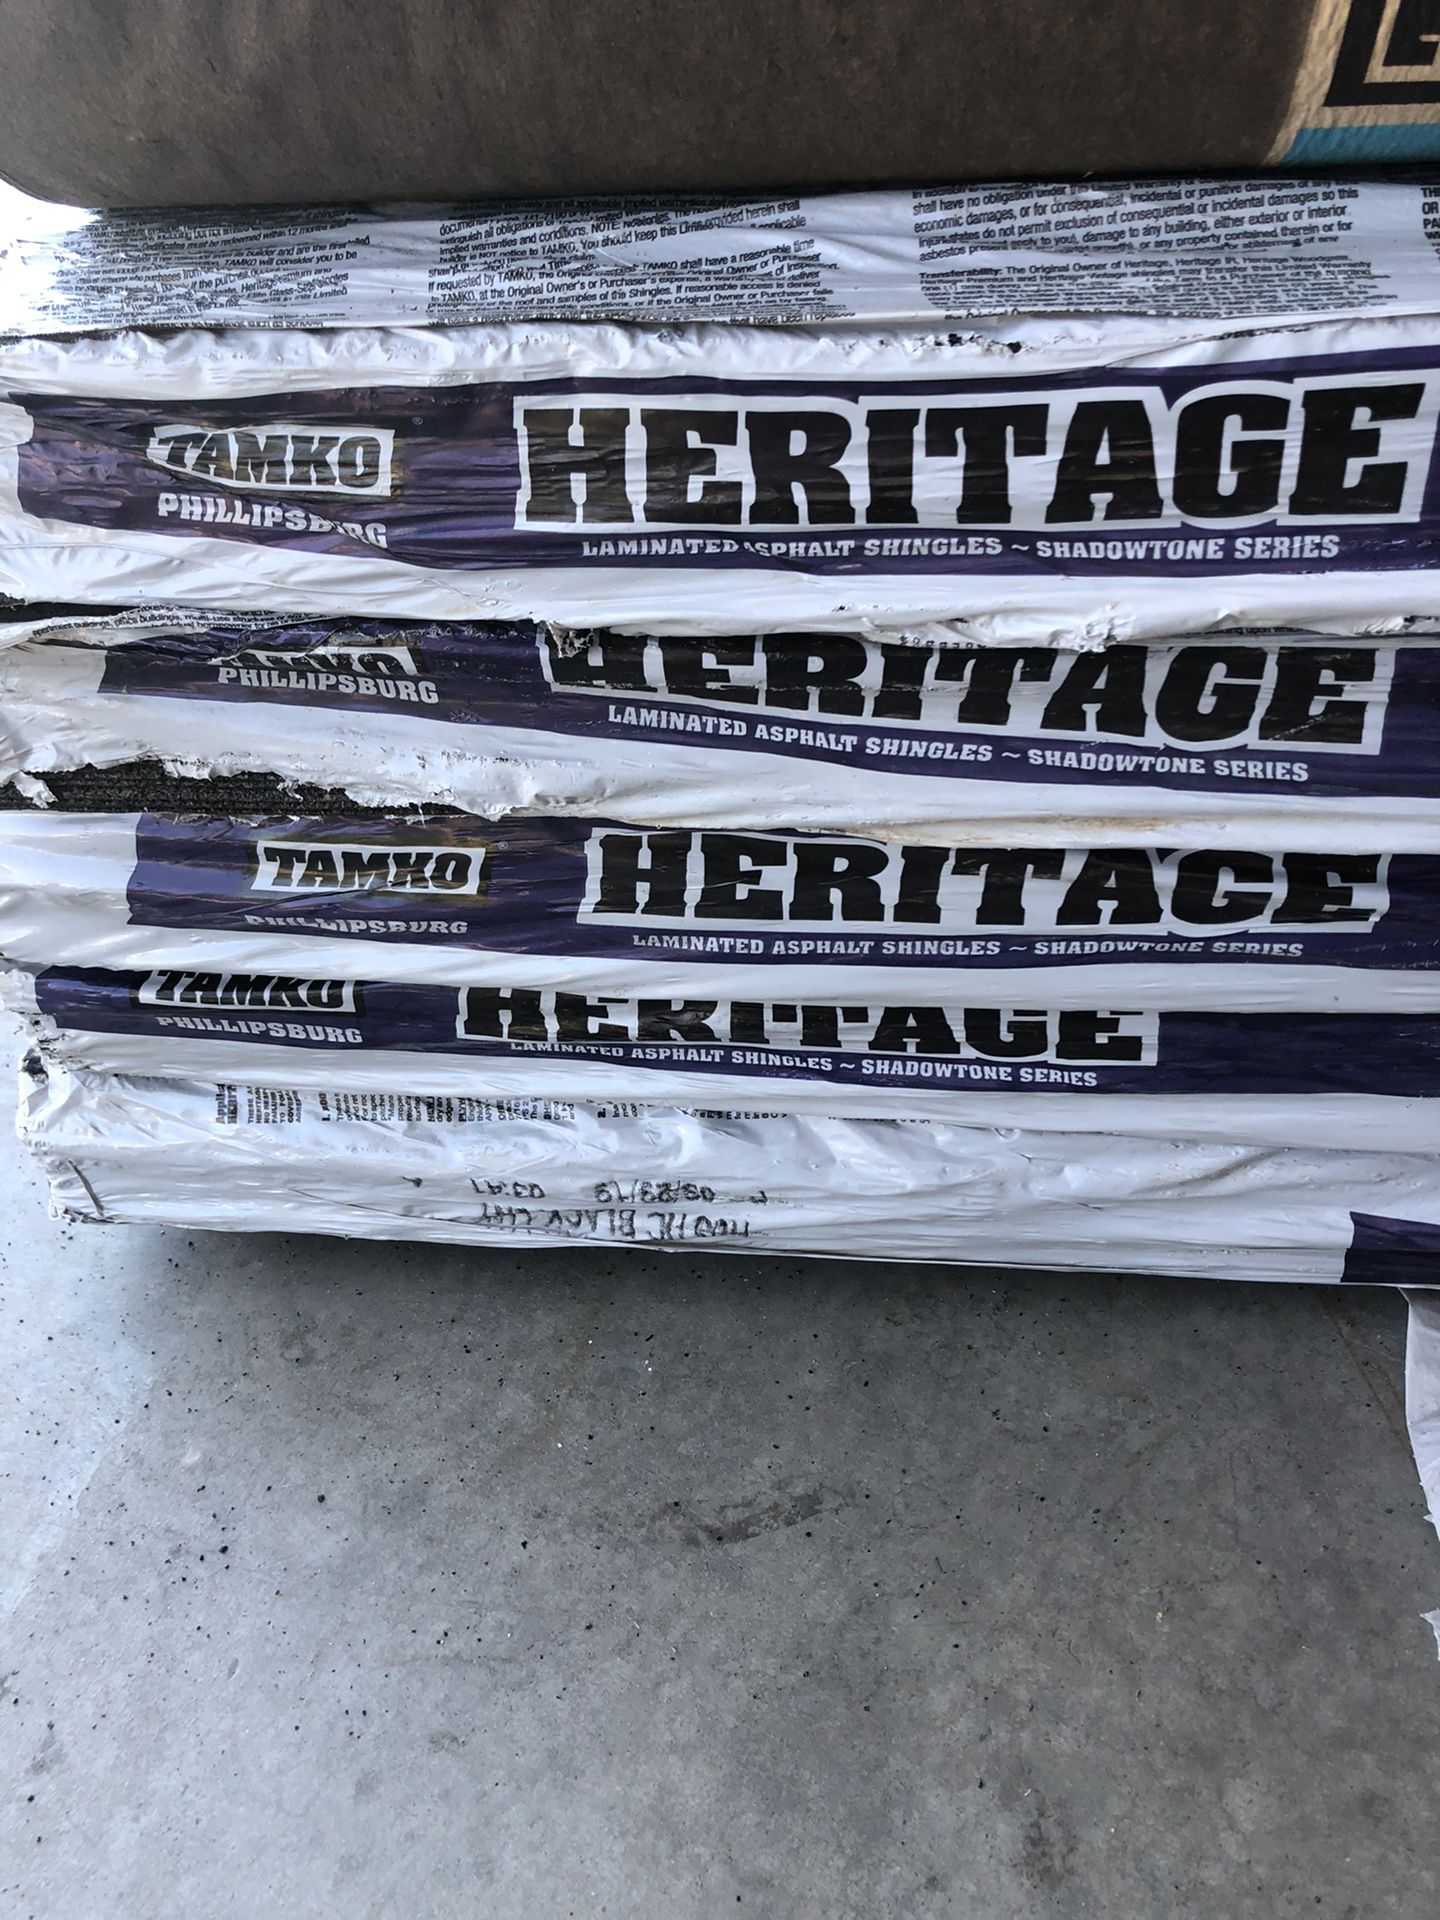 12 bundles of Tamko Heritage shingles, 4 rolls of 30 lb felt, partial bundles of starter and ridge cap shingles. Must go! Make offer!